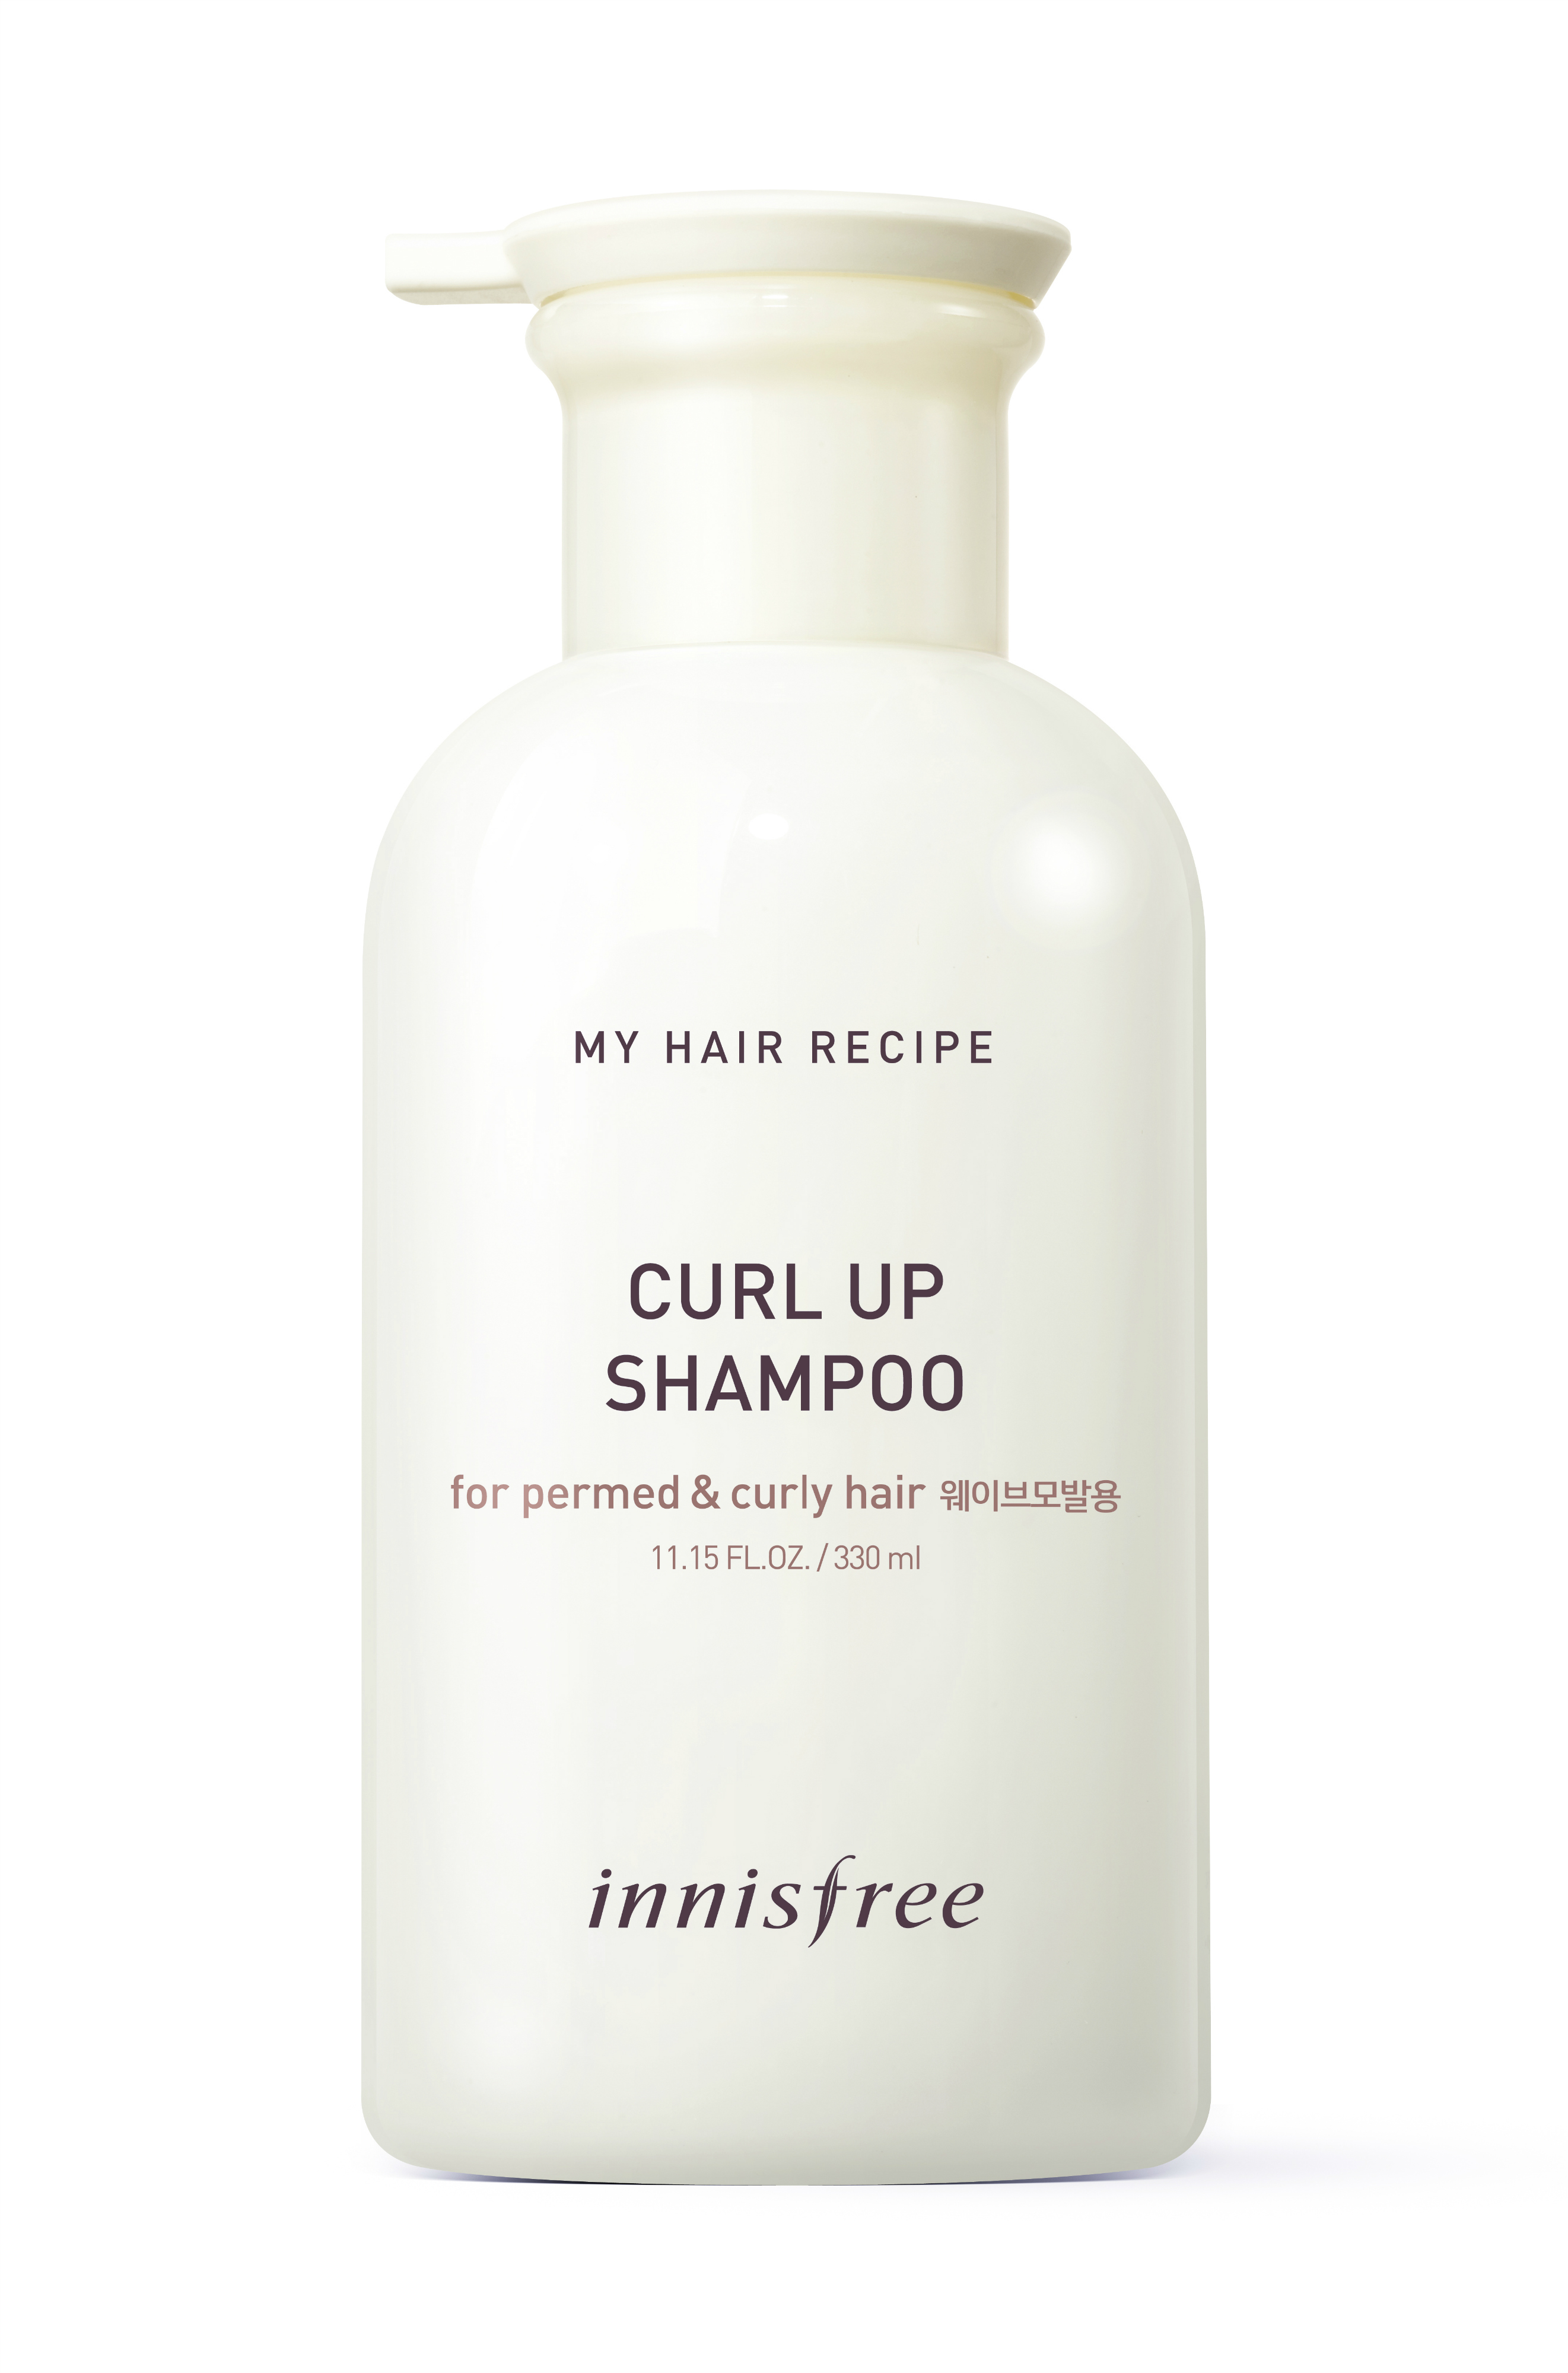 innisfree My Hair Recipe Curl Up Shampoo (RM48.00/330ml)-Pamper.my